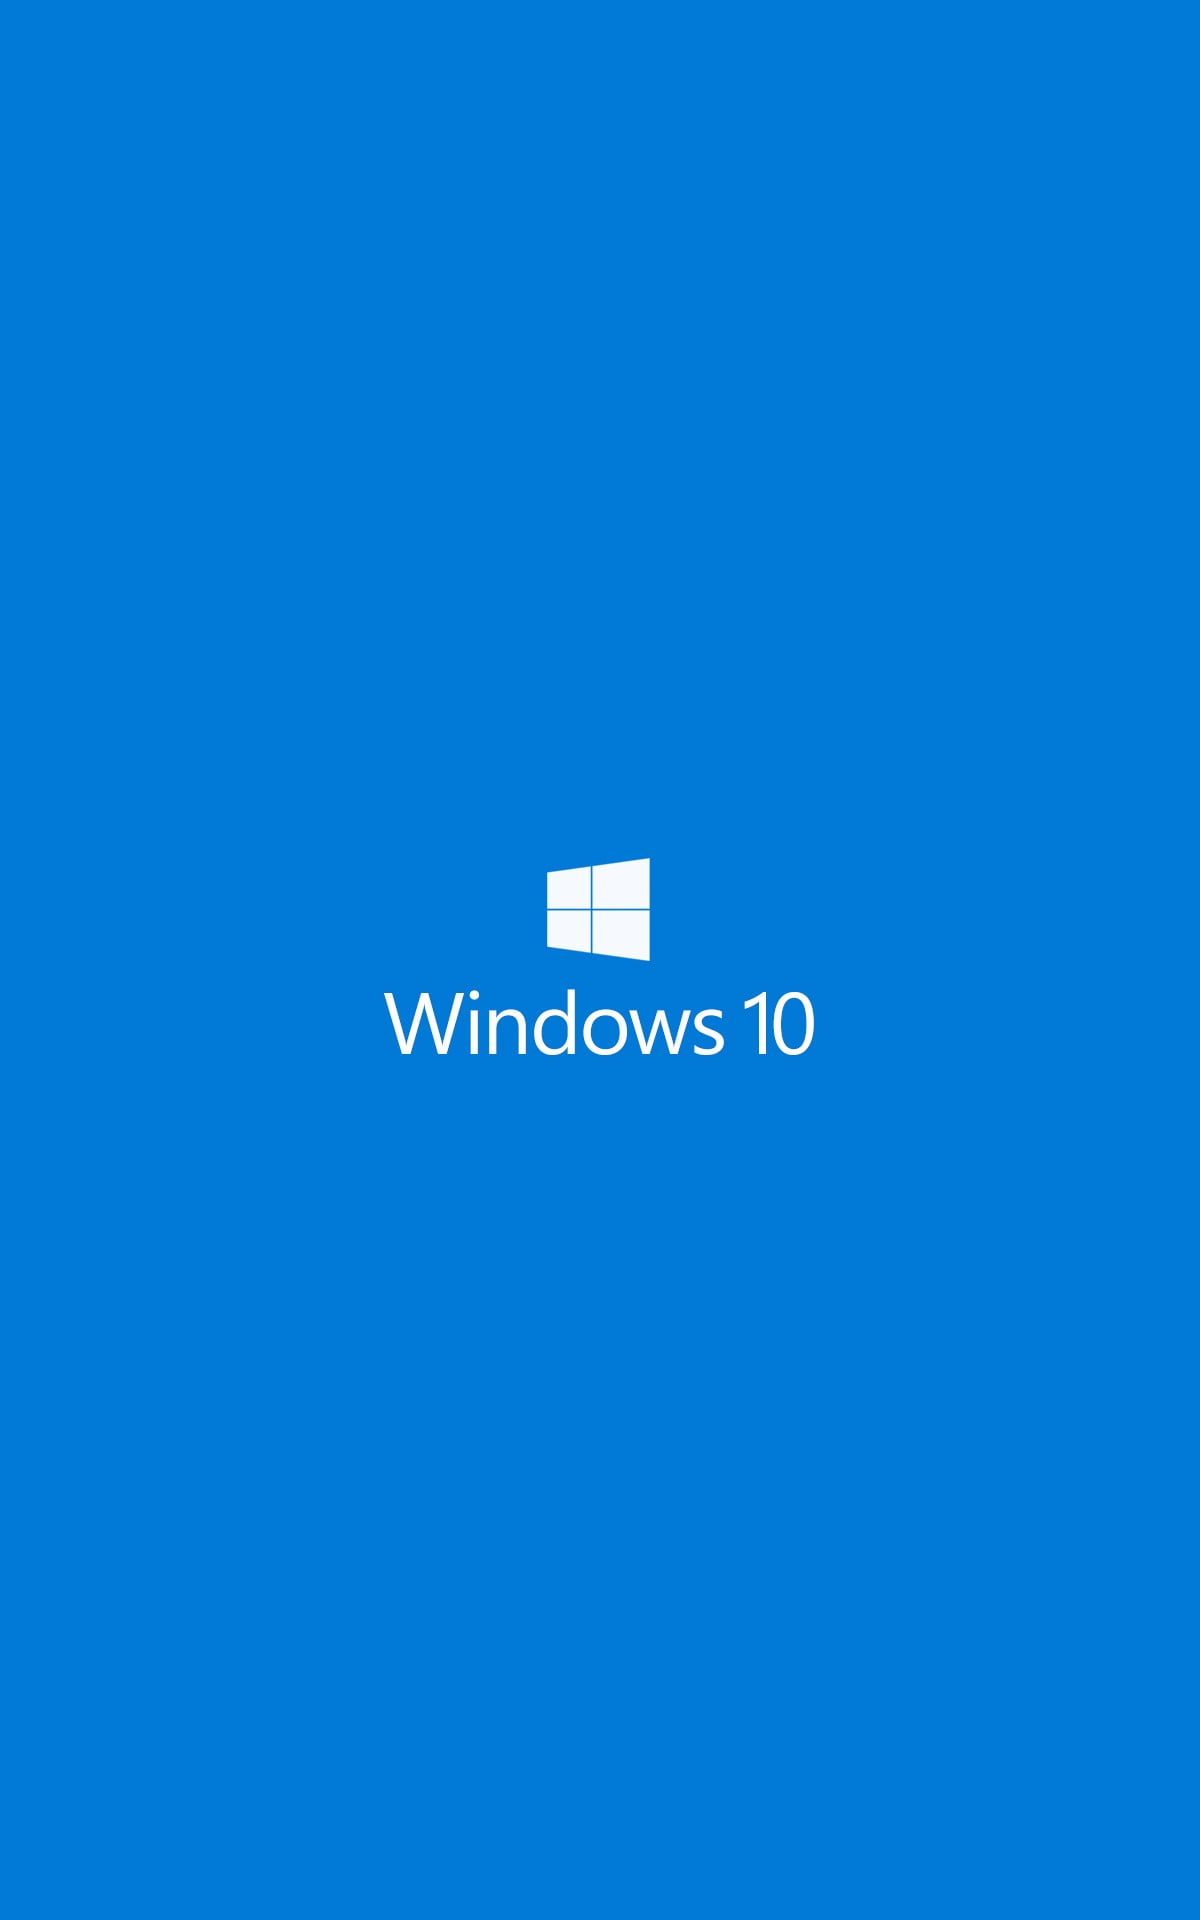 Microsoft Windows 10 OS, operating system, minimalism, portrait display